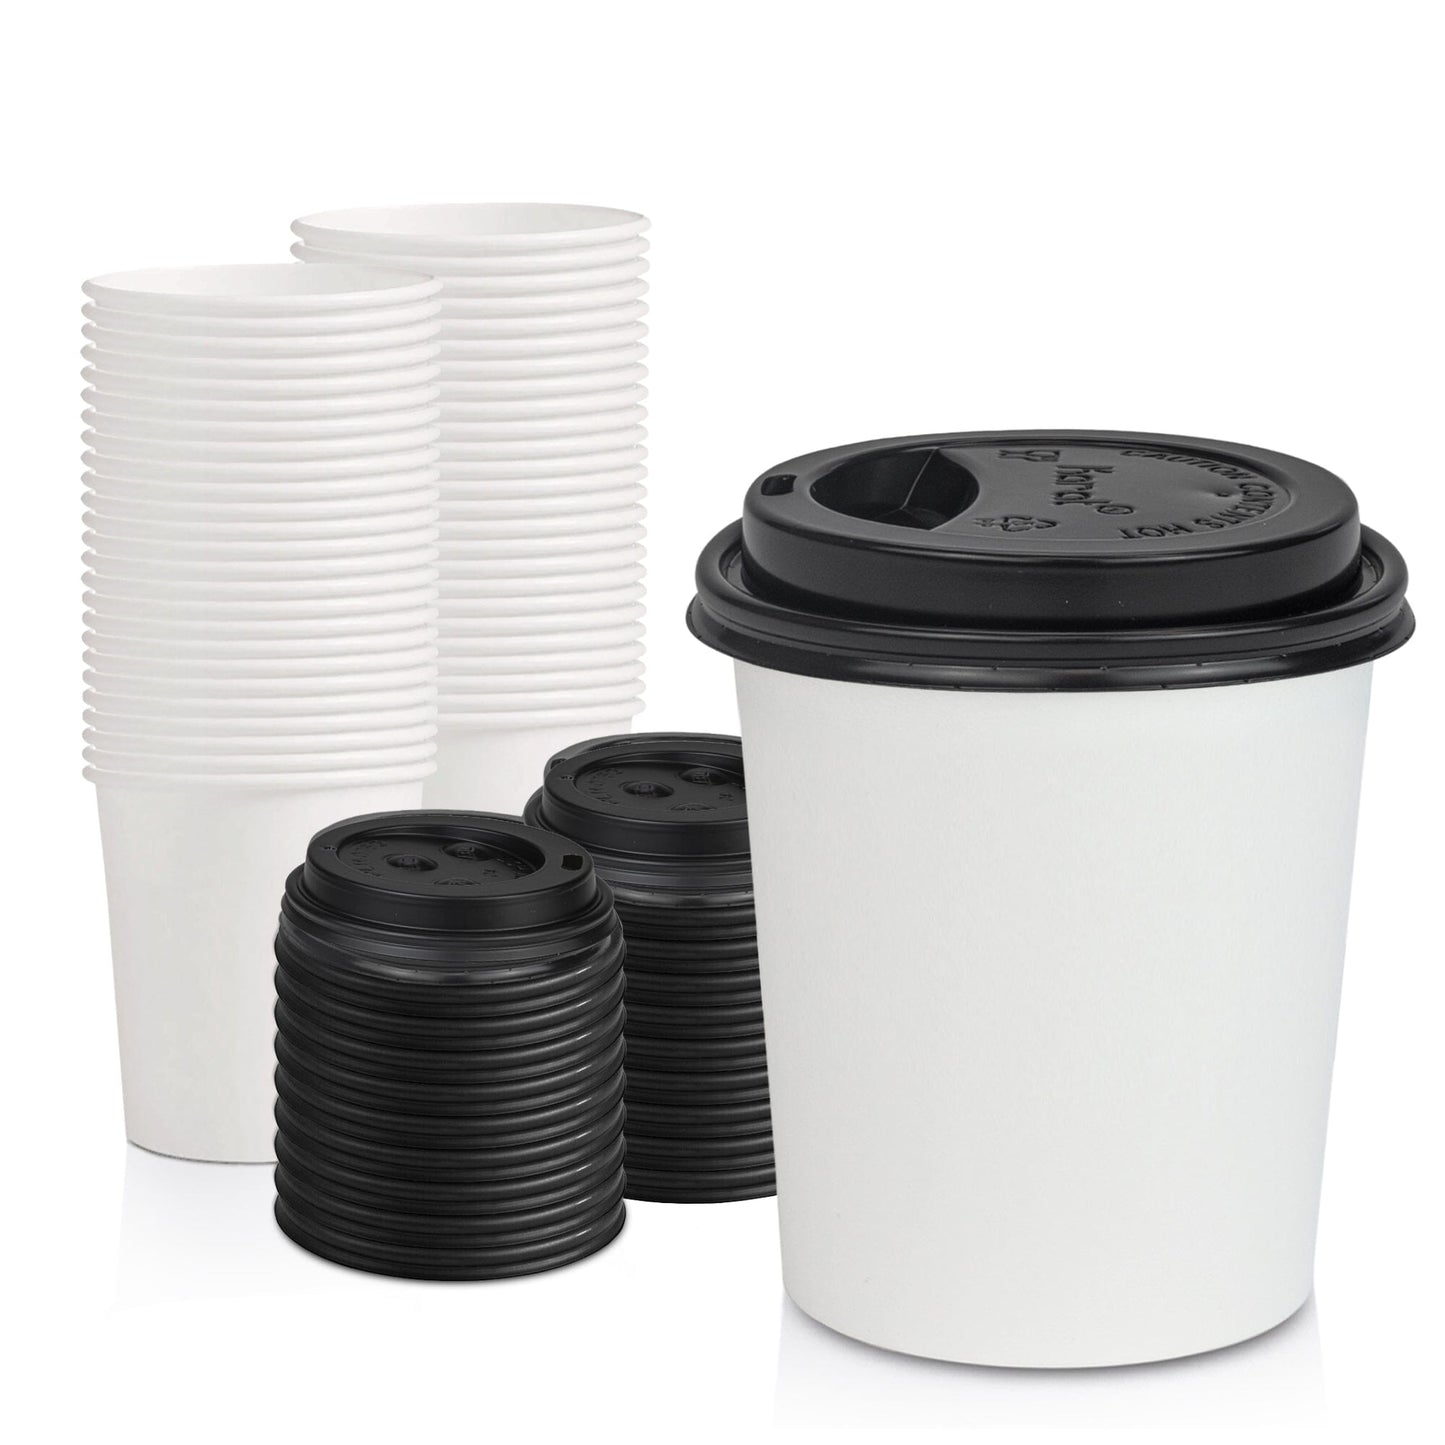 Starbucks 12 Oz Hot Cups - 1000 cups